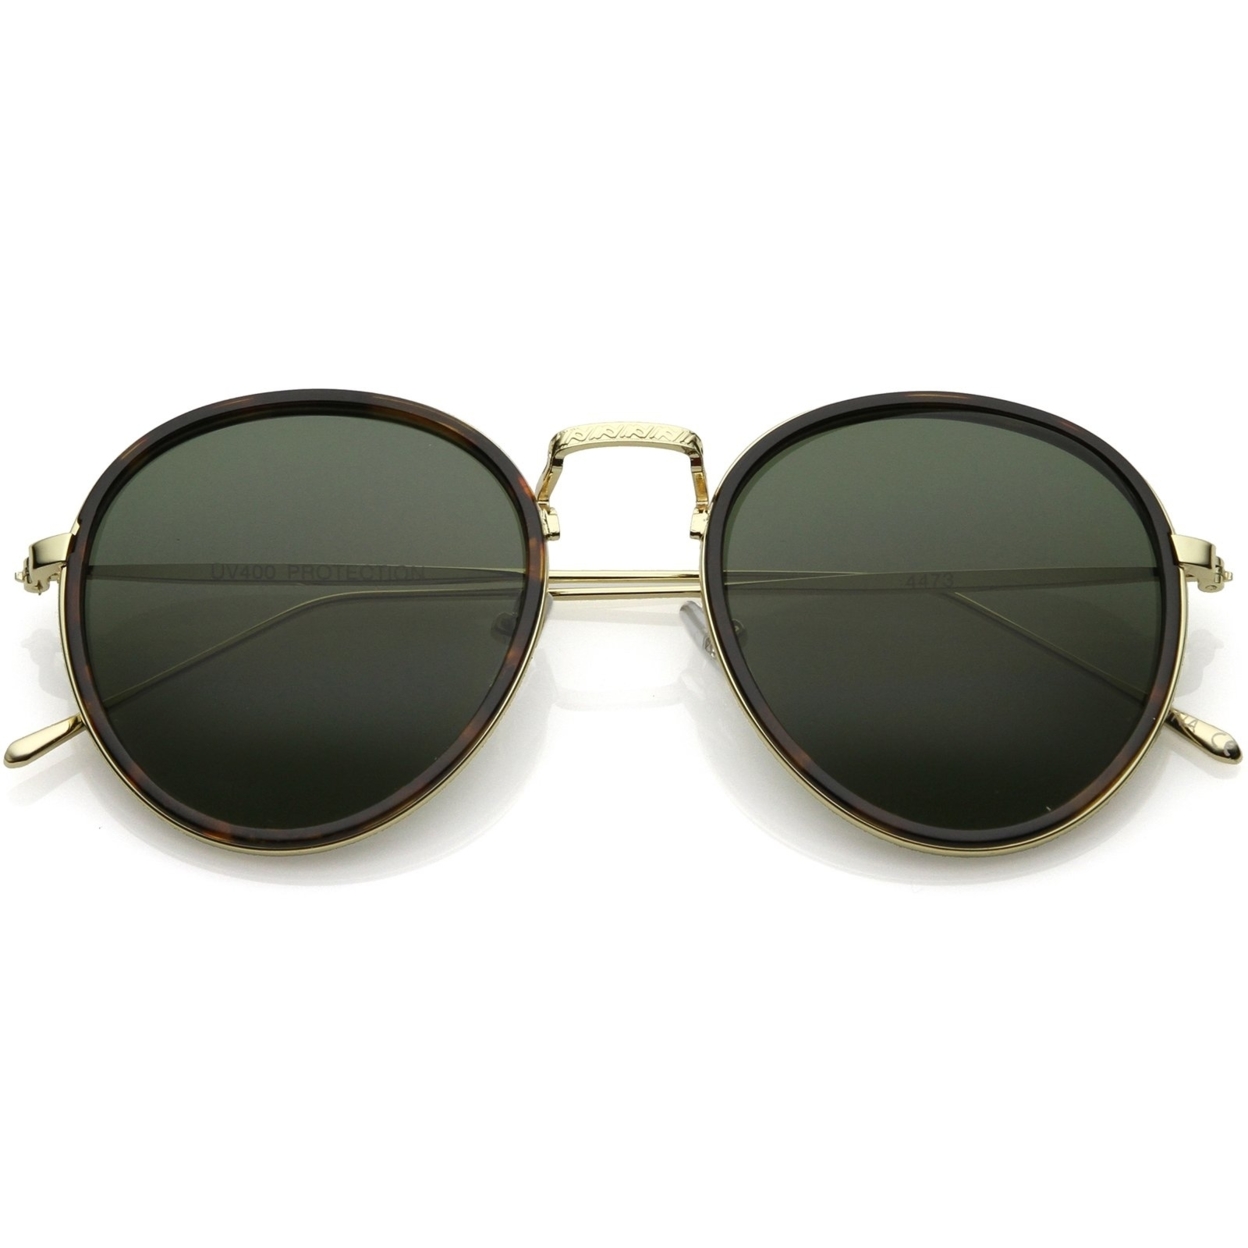 Modern Round Sunglasses Engraved Slim Metal Arms Neutral Color Flat Lens - Black Silver / Smoke